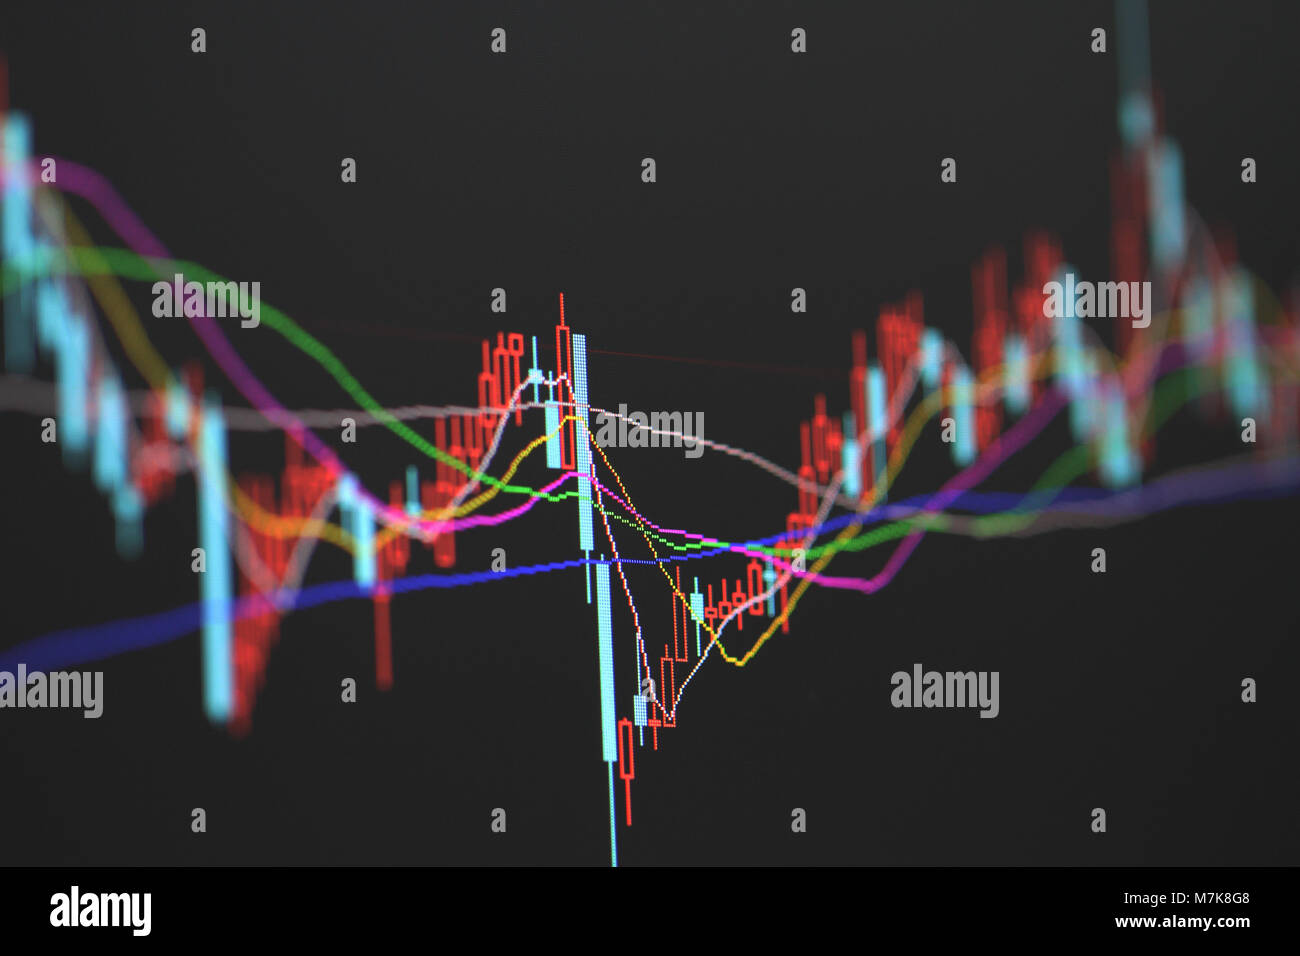 Stock Market Finance K Chart Stock Photo